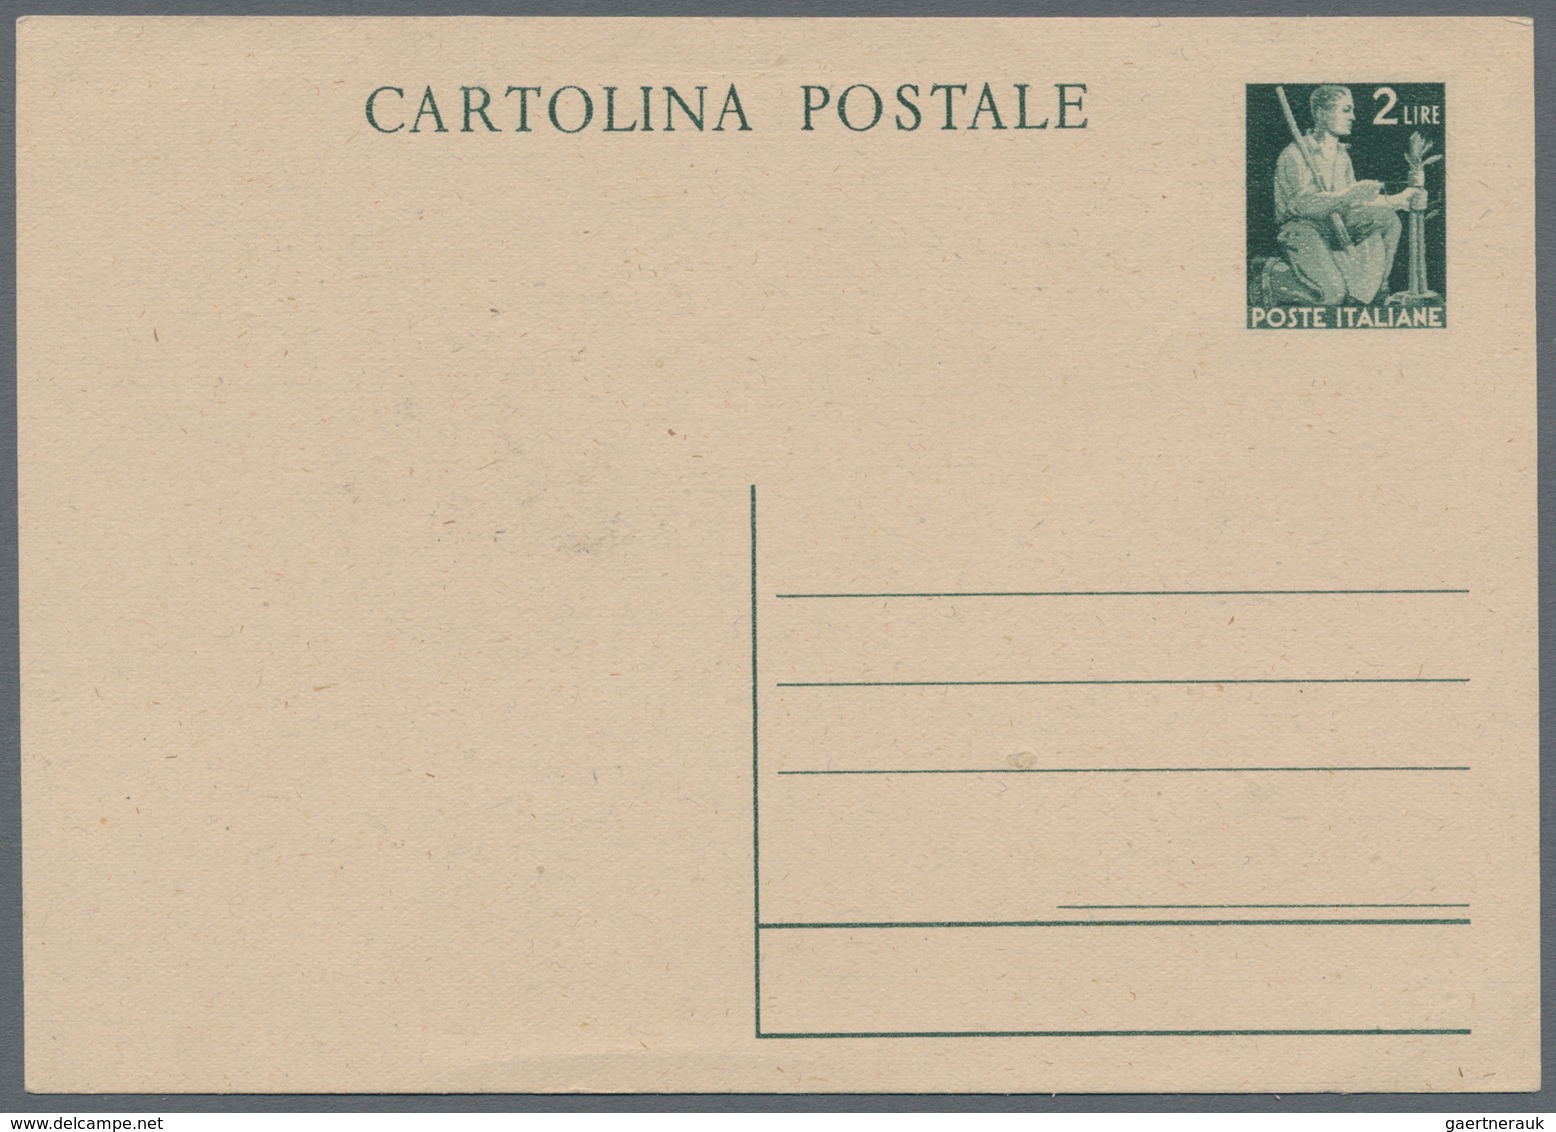 Italien - Ganzsachen: 1946. DEMOCRATICA - Without Savoyan Coat Of Arms, 2 Lire Green, Postal Station - Entero Postal